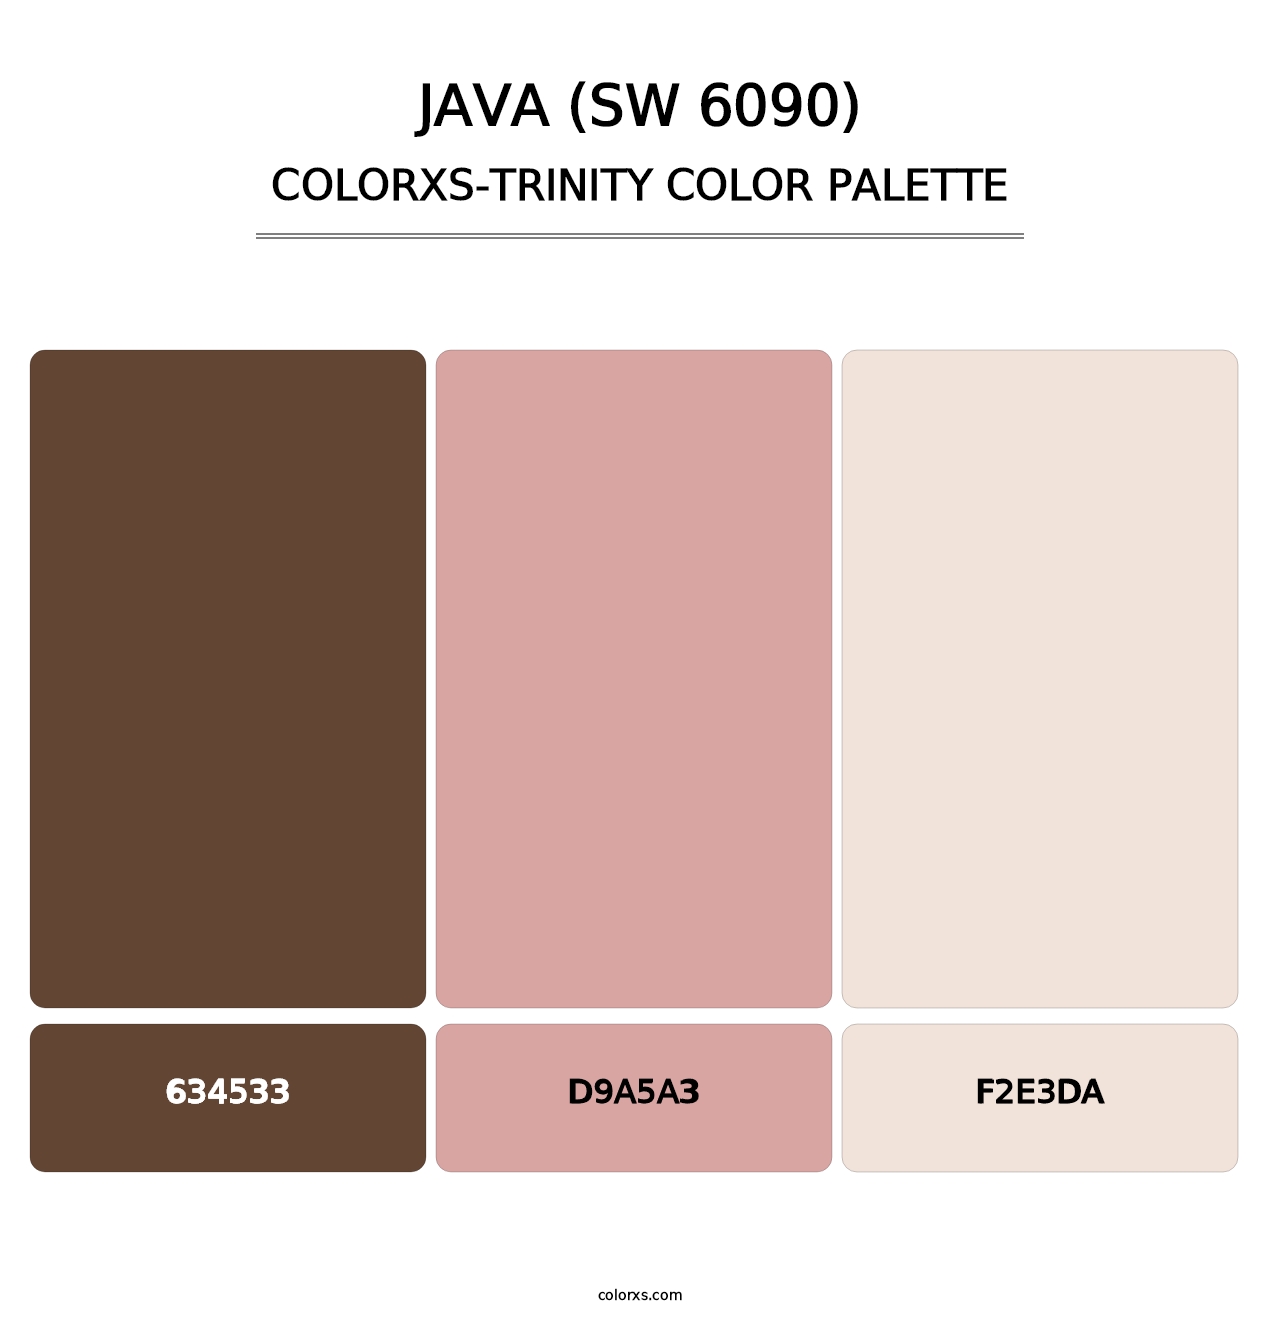 Java (SW 6090) - Colorxs Trinity Palette